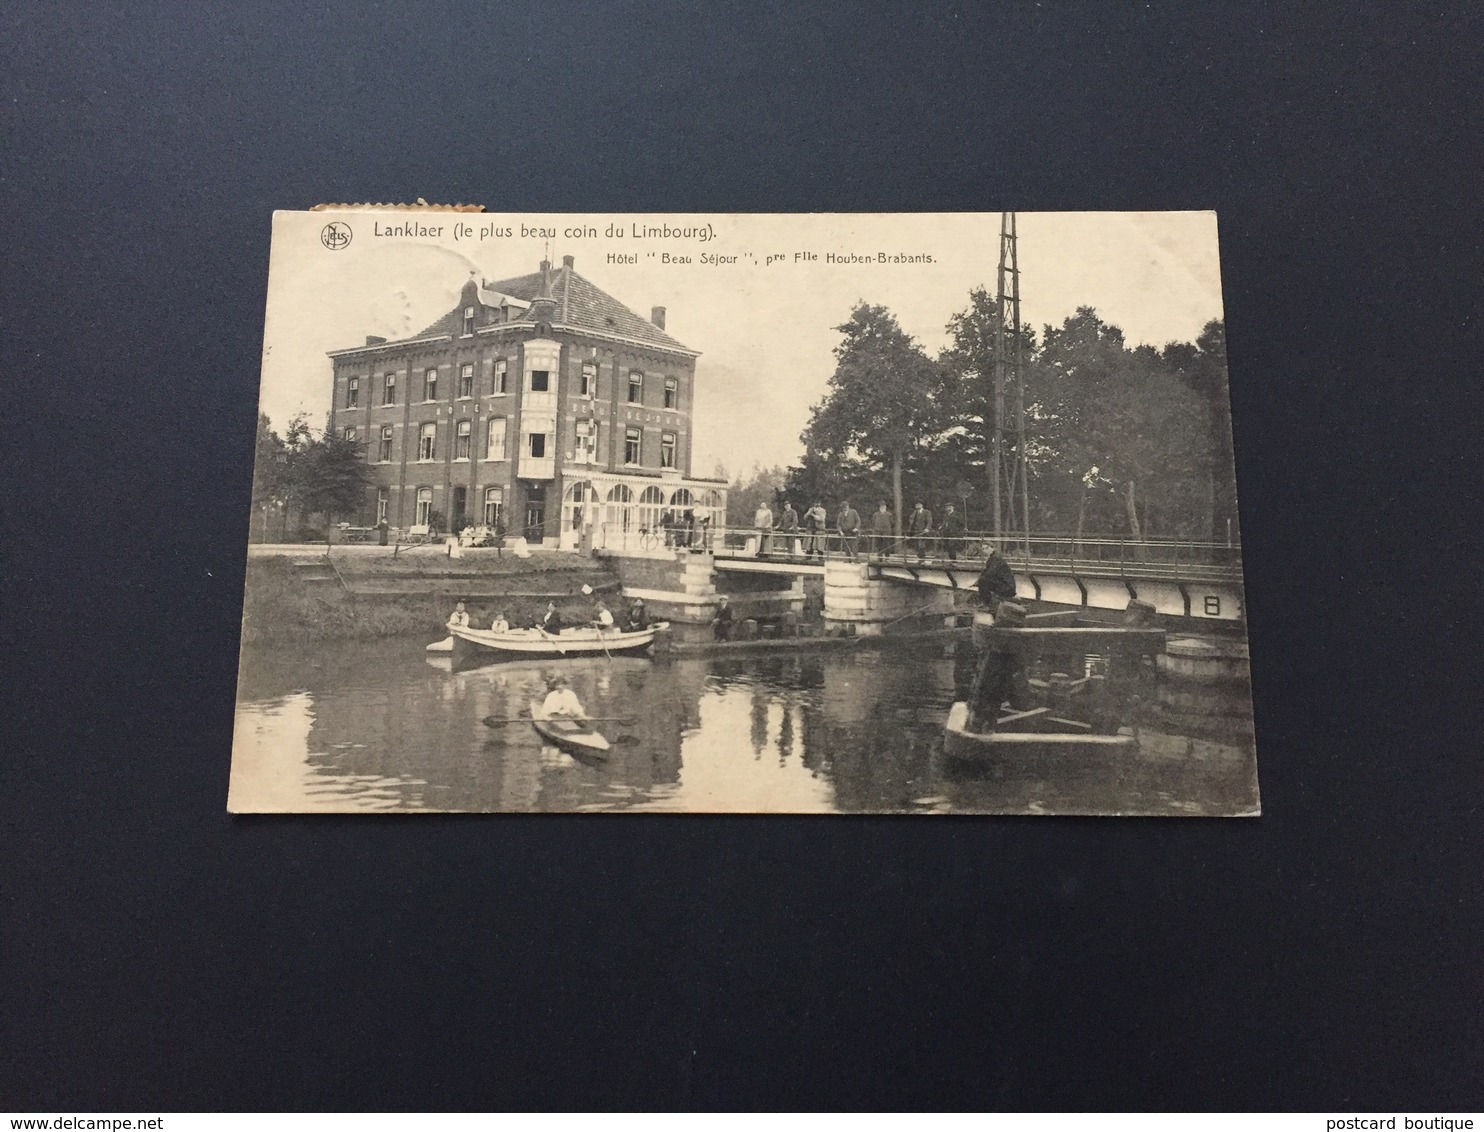 Lanklaer - Hotel Beau Sejour - Postzegel - Timbre - Olympiade 1920 - Antwerpen - Dilsen-Stokkem